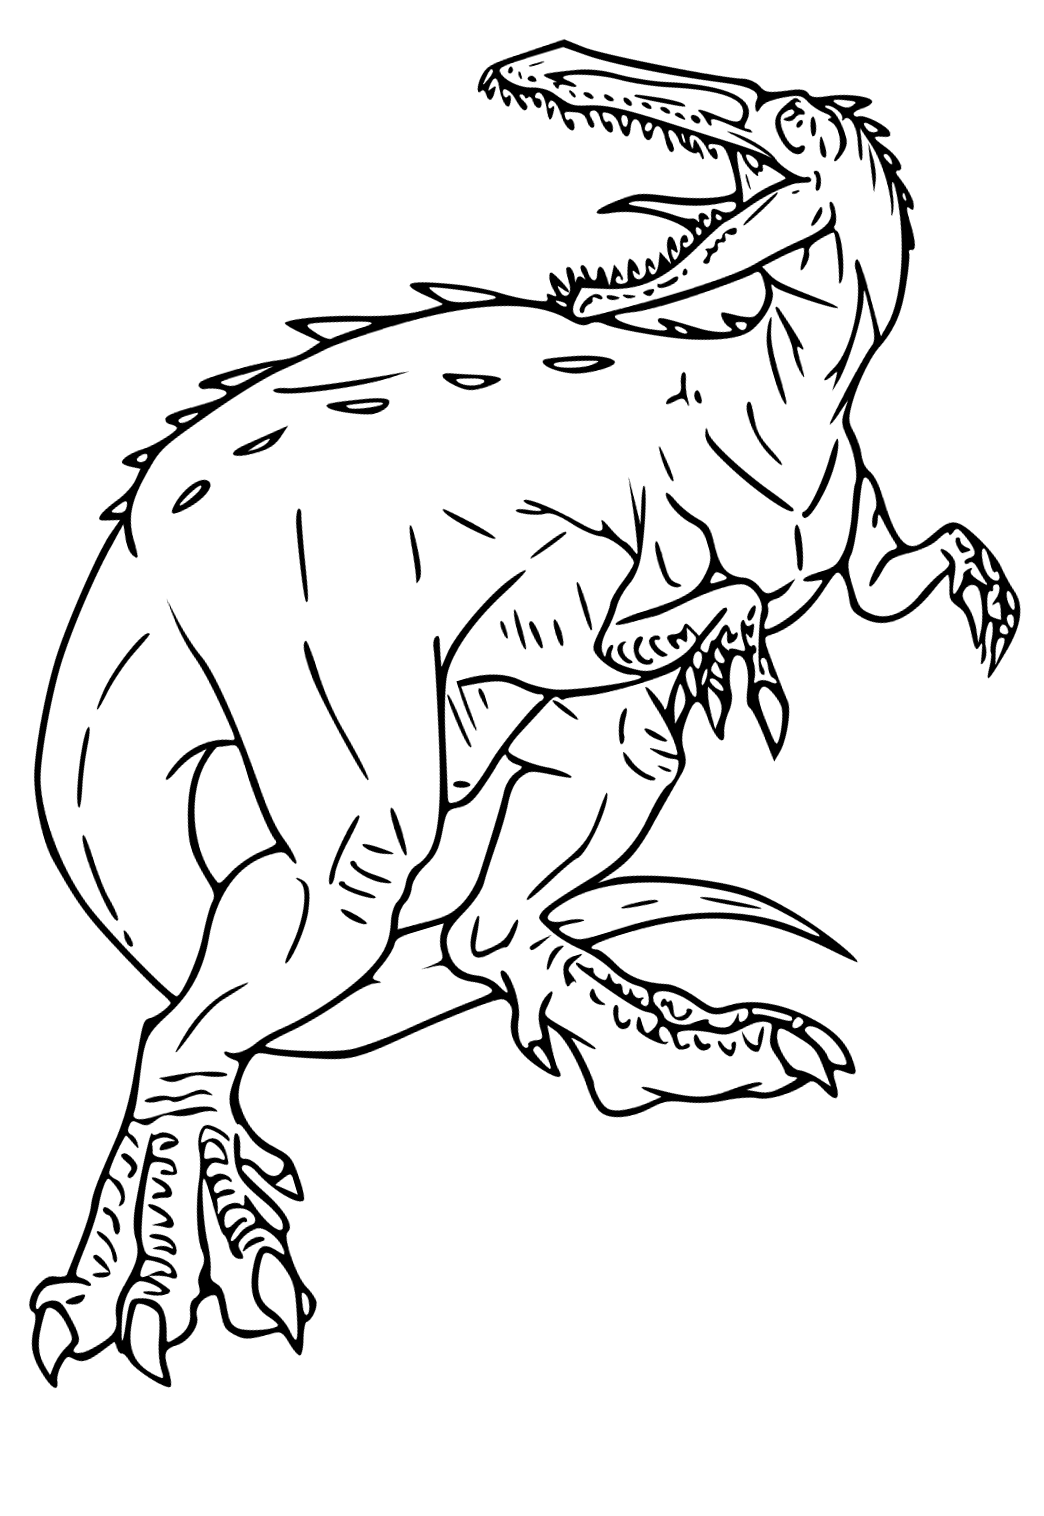 ג'יגנוטוזאורוס